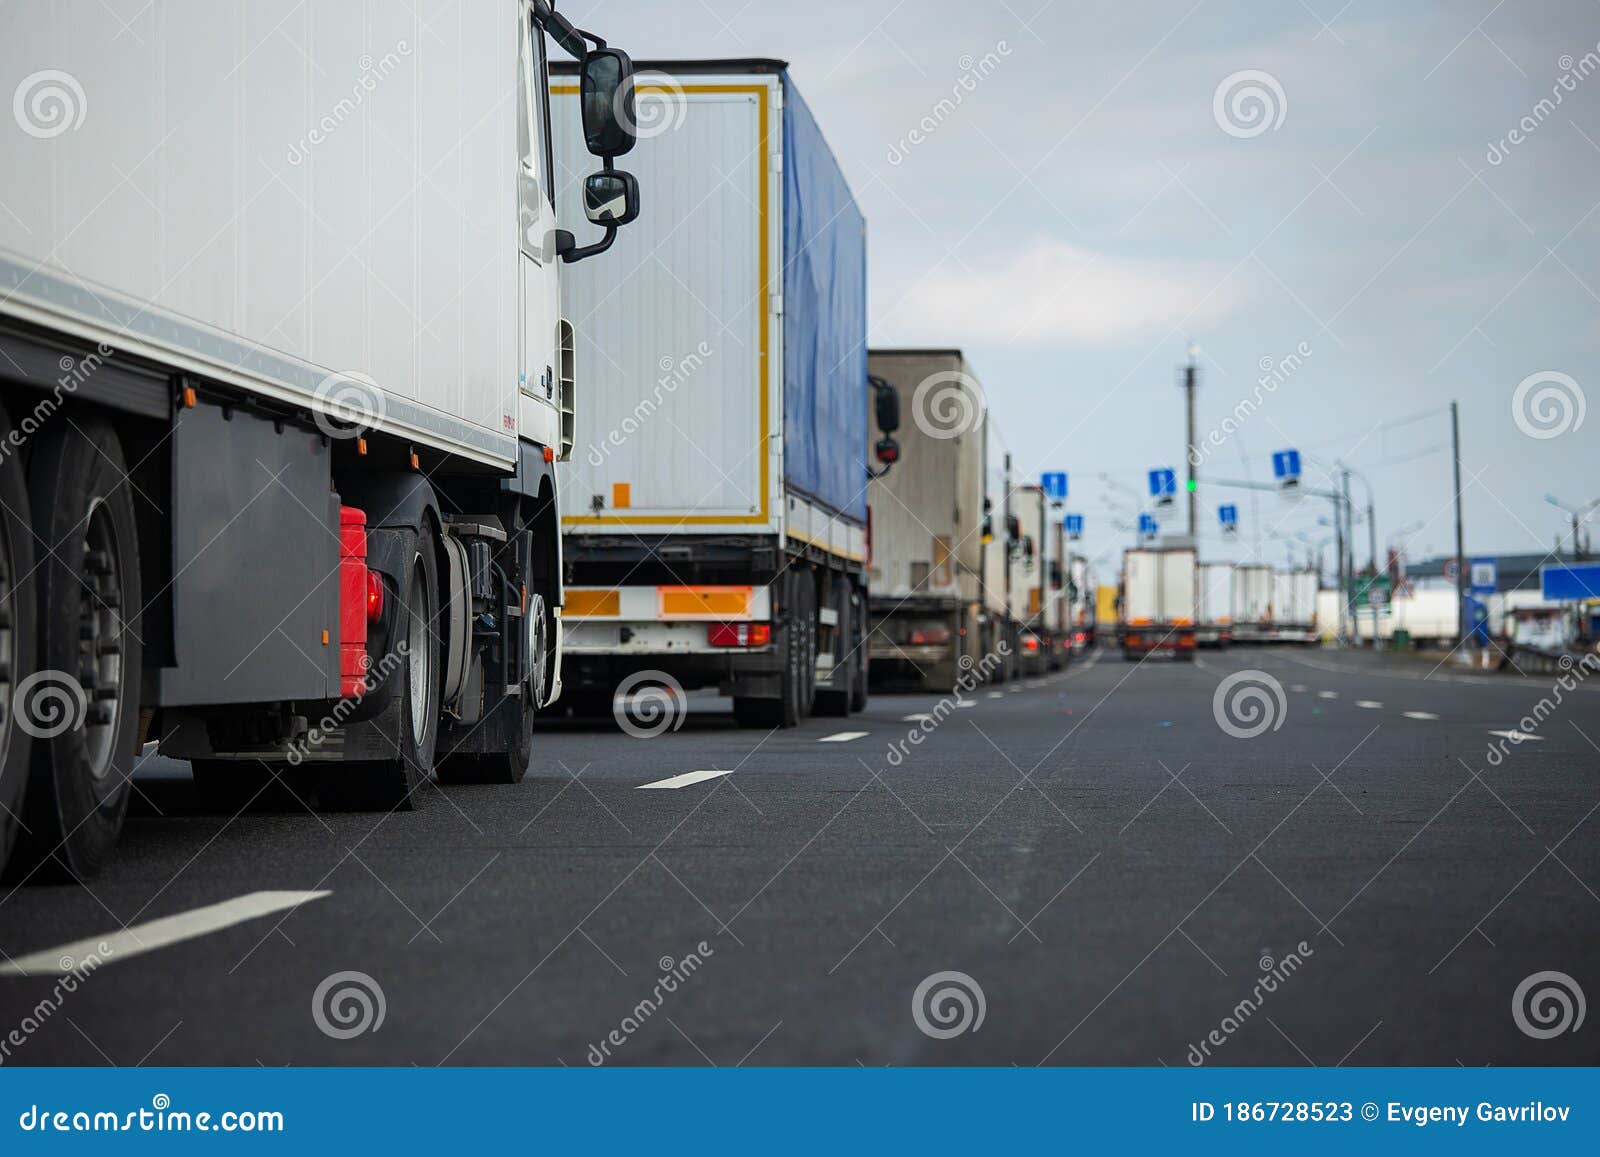 a long traffic jam of trucks on a closed border